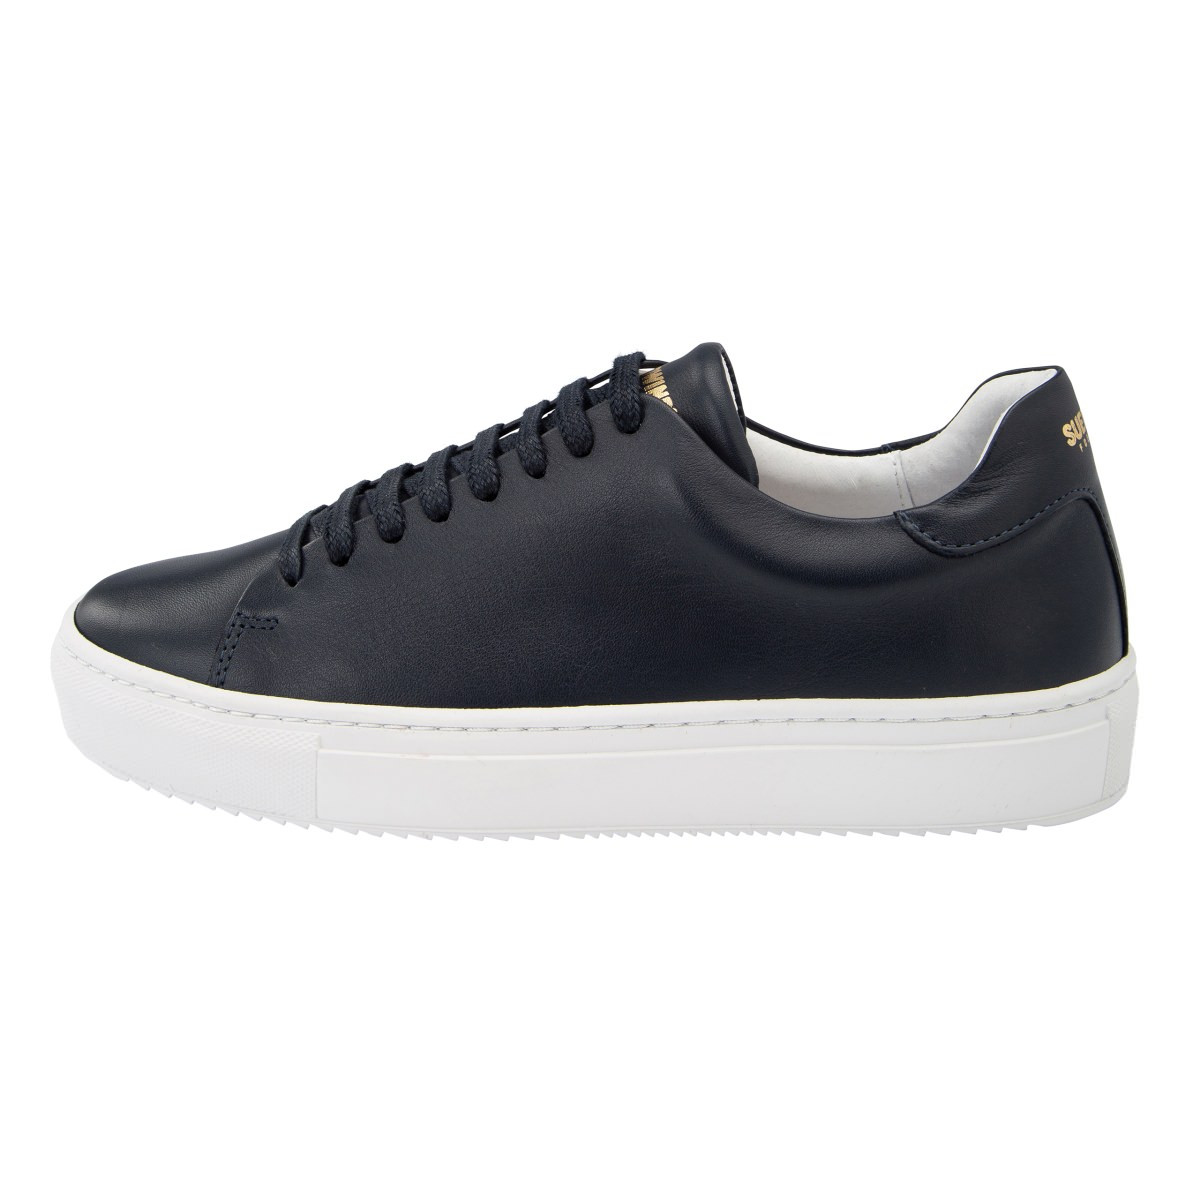 Suedwind-Ashton-Leather-Leder-Sneaker-Schuhe-Boots-Navy-Blue-Navy-Blau-10170015-01_1280x1280